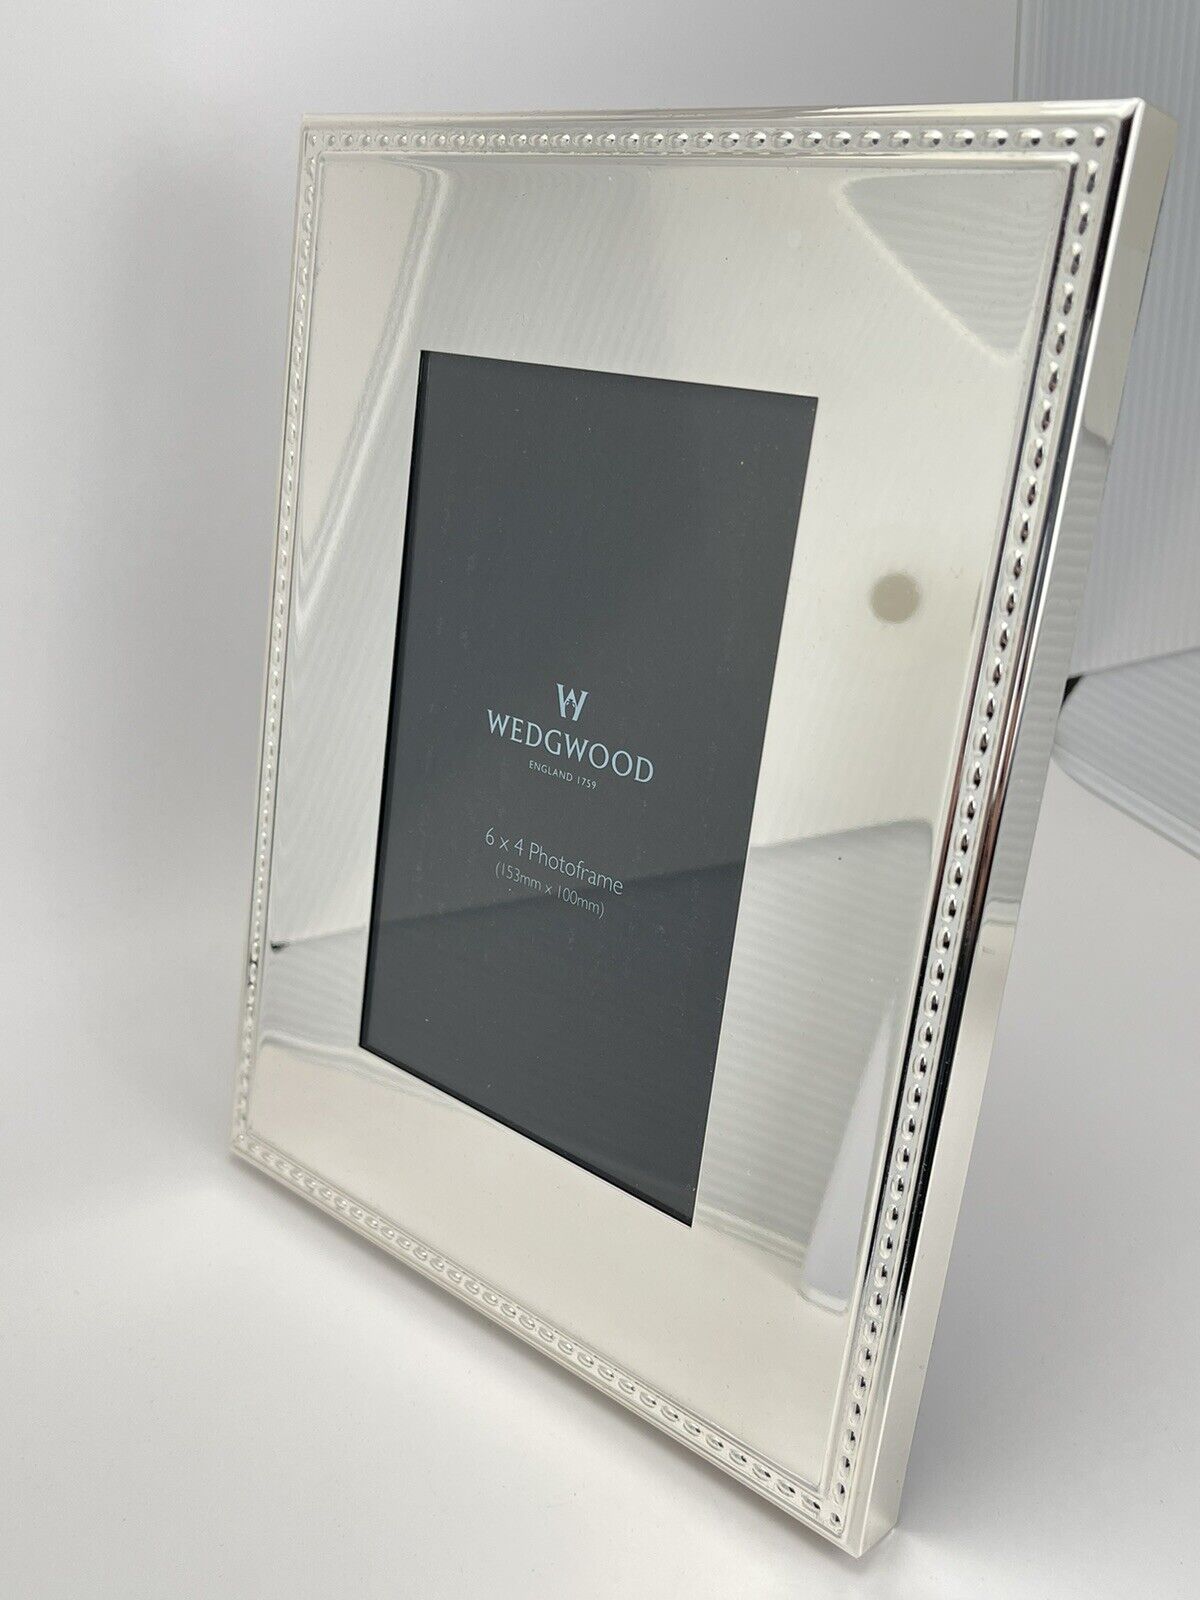 Wedgwood photoframe 6x4 mirrored IOB giftware raised edge design